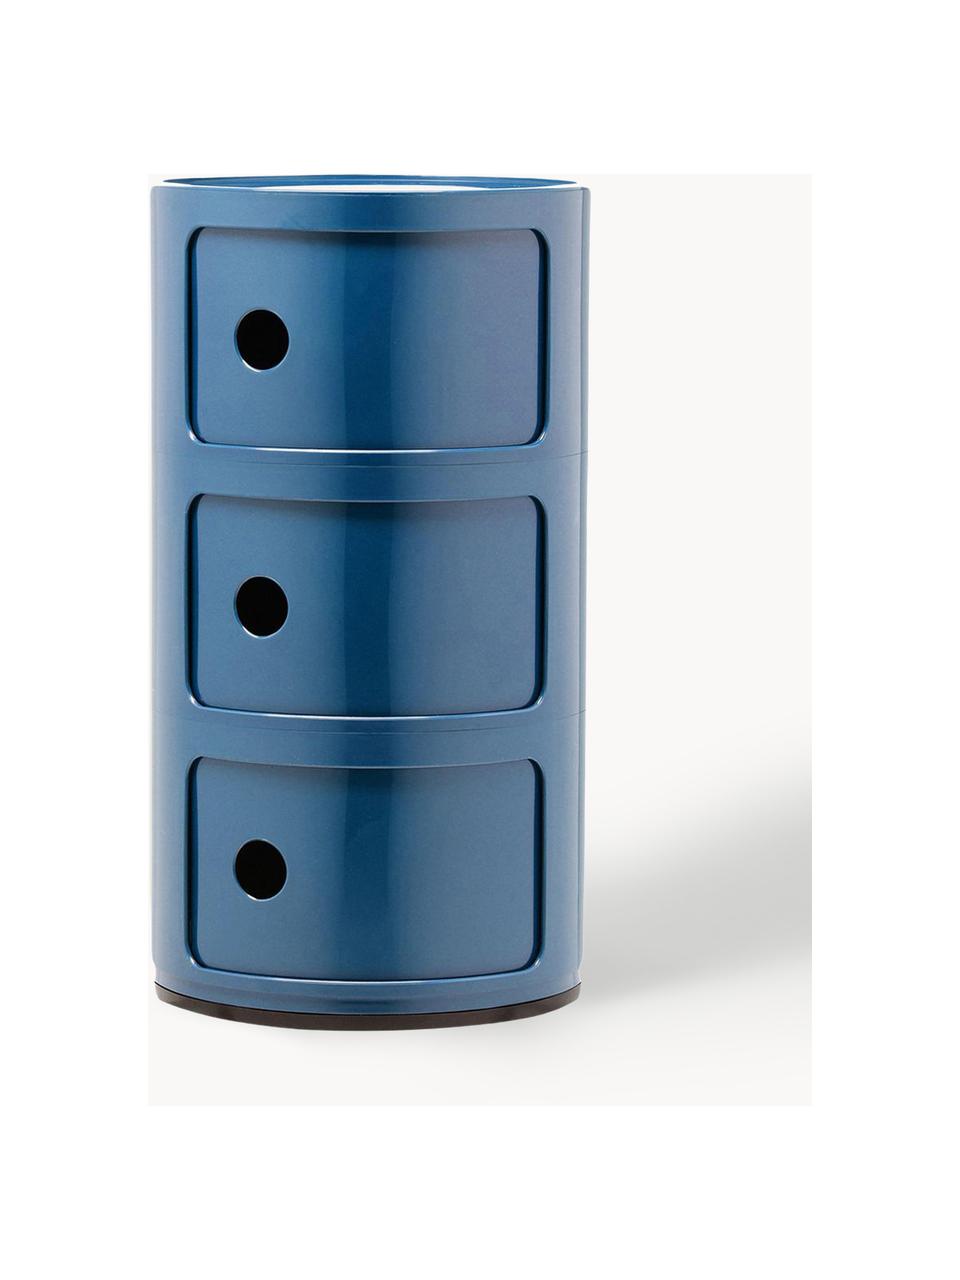 Design container Componibili, 3 modules, Kunststof (ABS), gelakt, Greenguard-gecertificeerd, Grijsblauw, glanzend, Ø 32 x H 59 cm